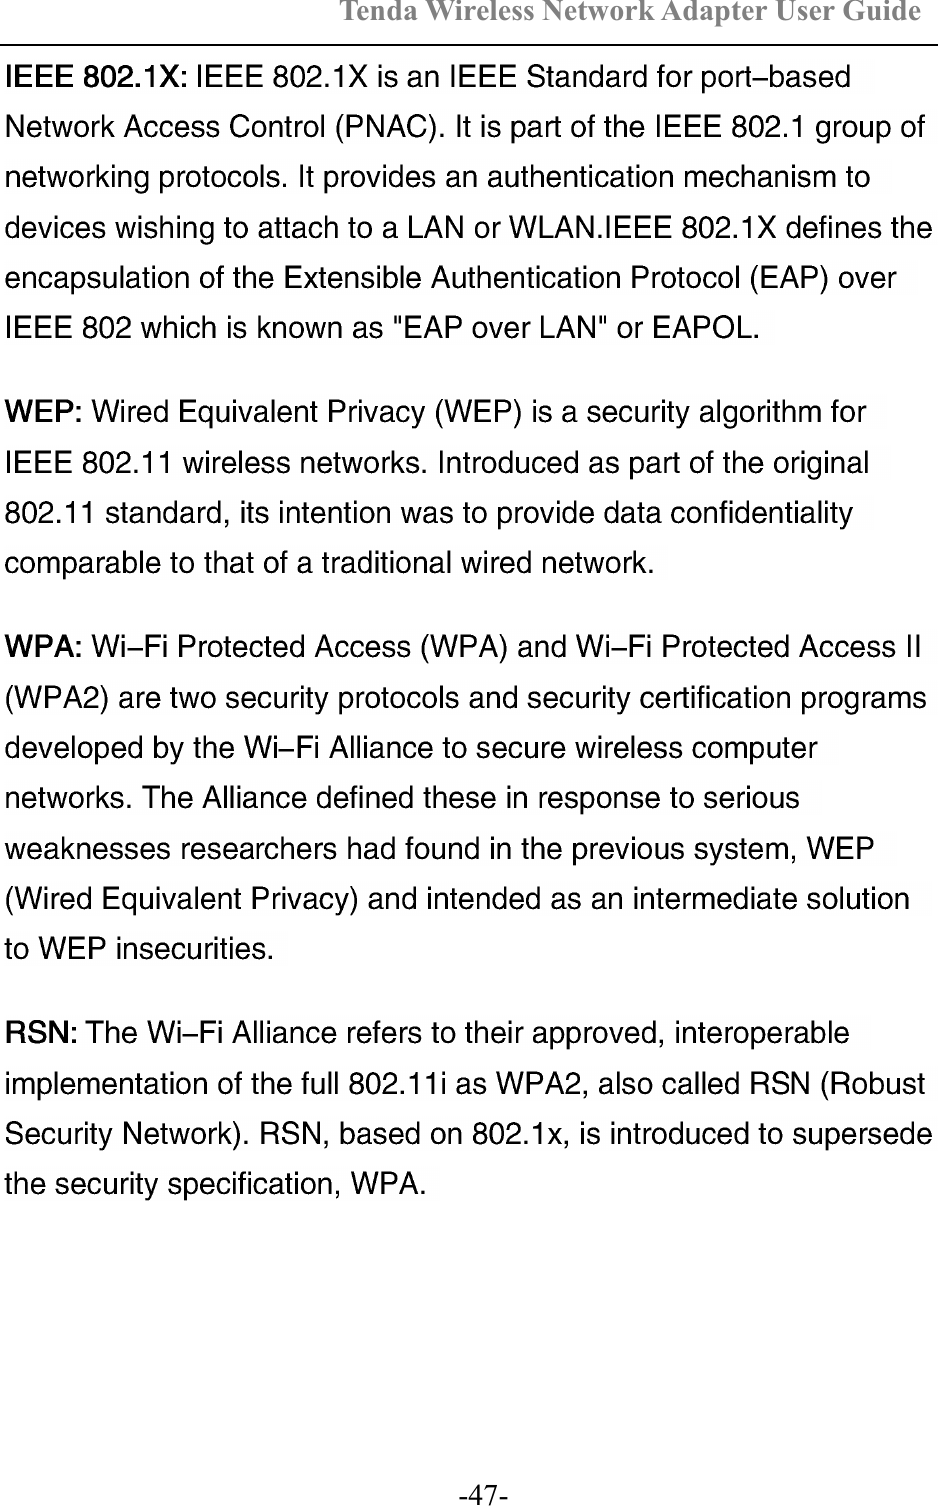 Tenda Wireless Network Adapter User Guide  -47- 